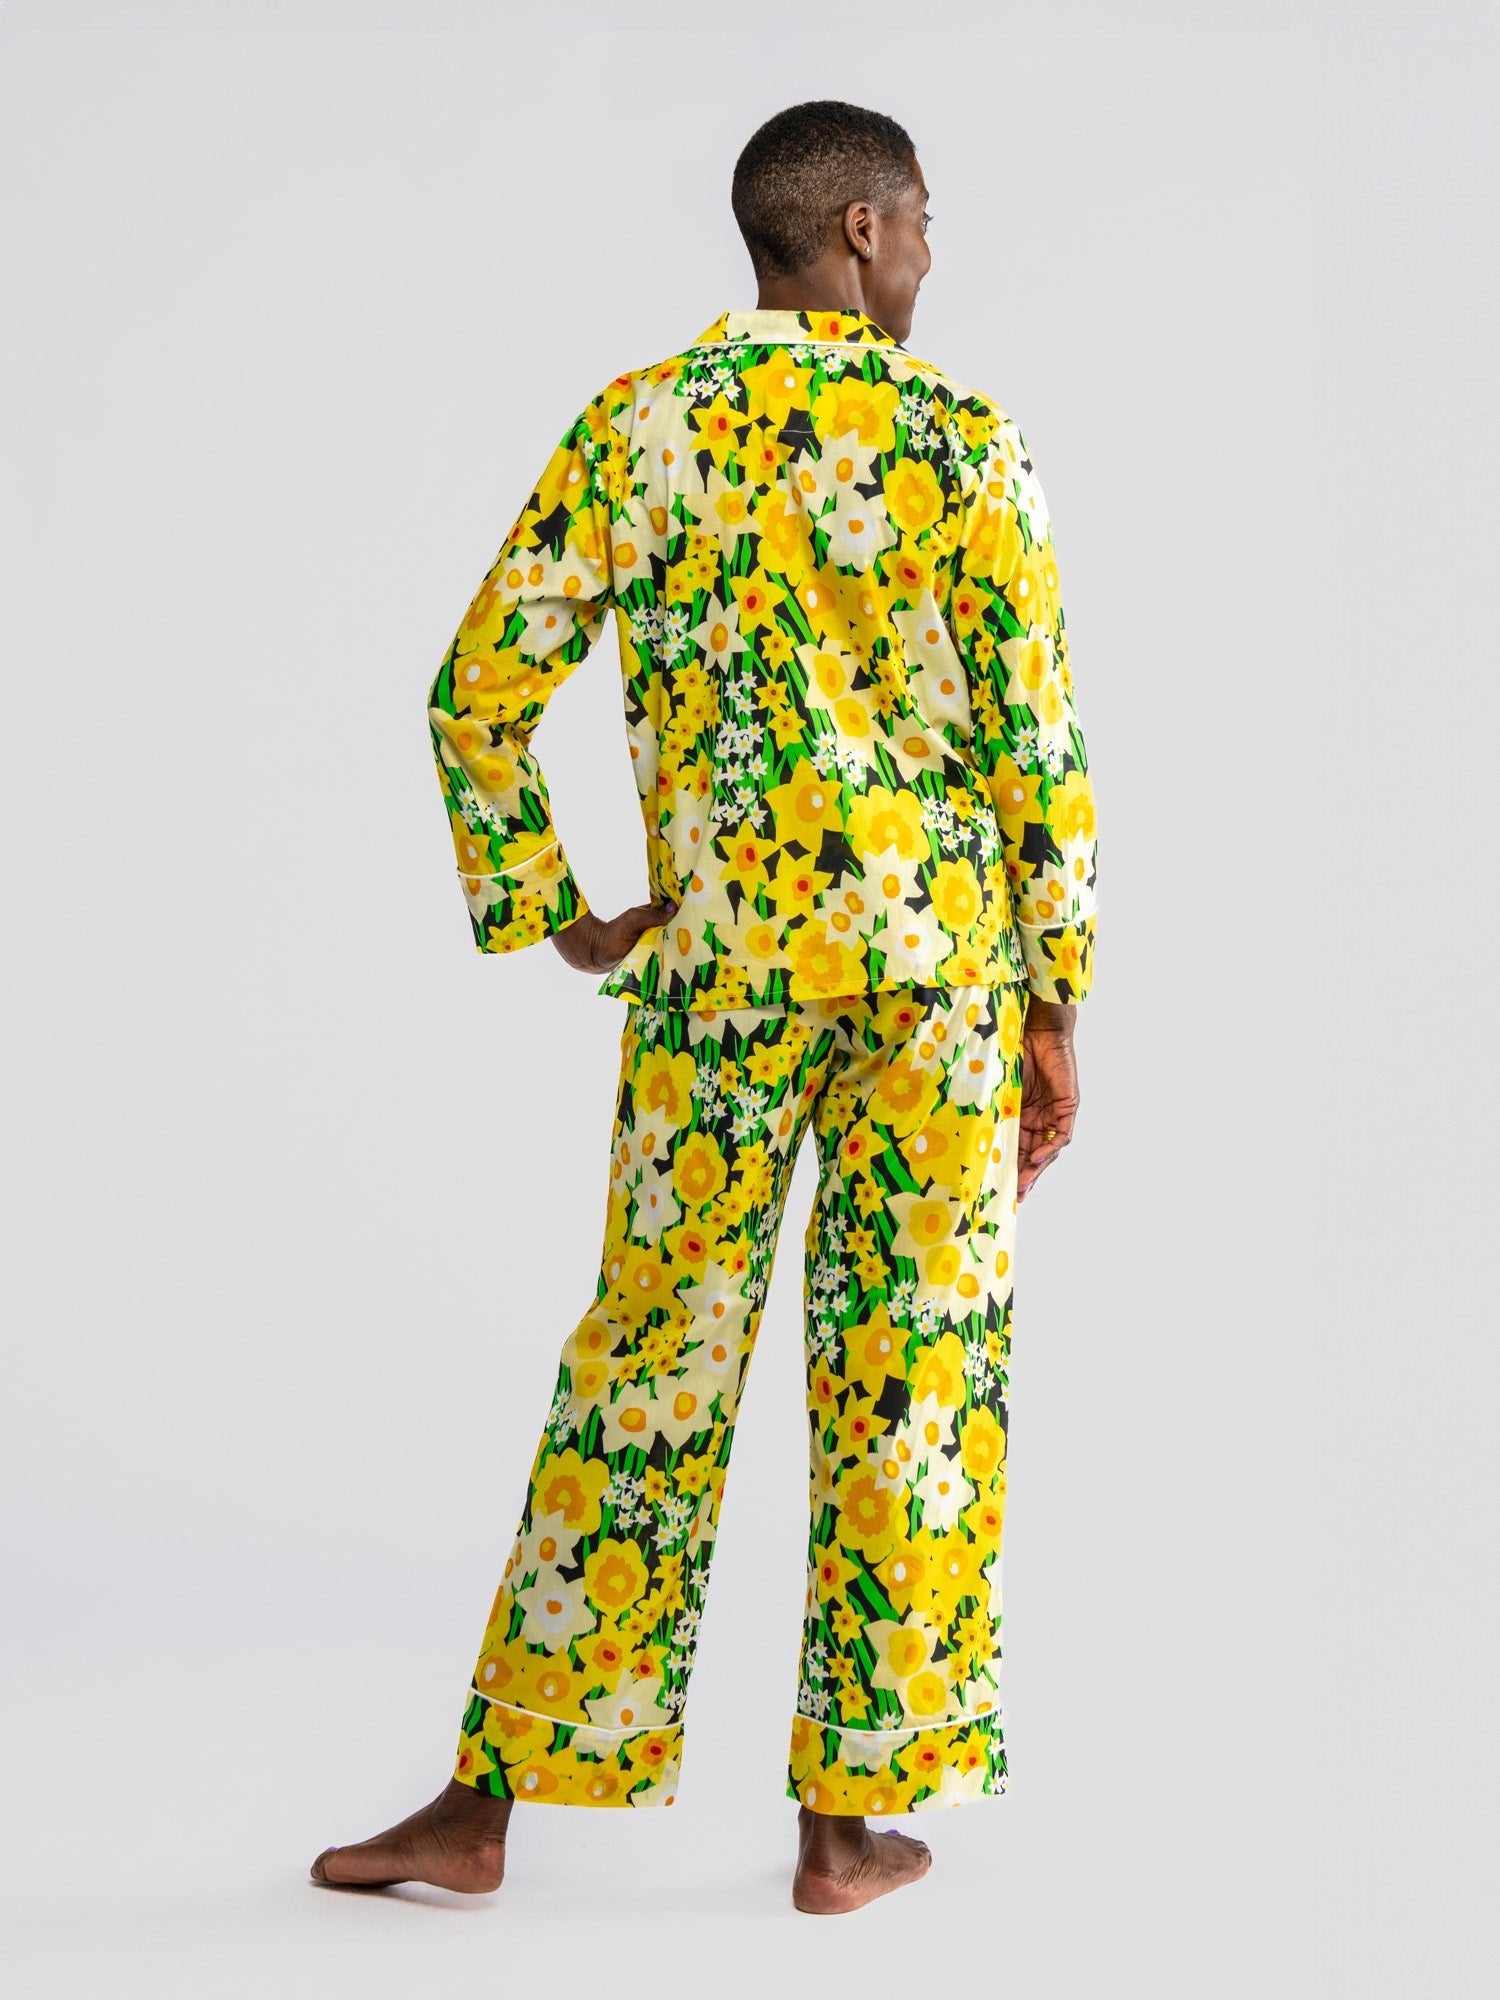 JOSEPHINE pajama set Daffodils - Lesley Evers - cotton PJs - daffodils - daffodils yellow